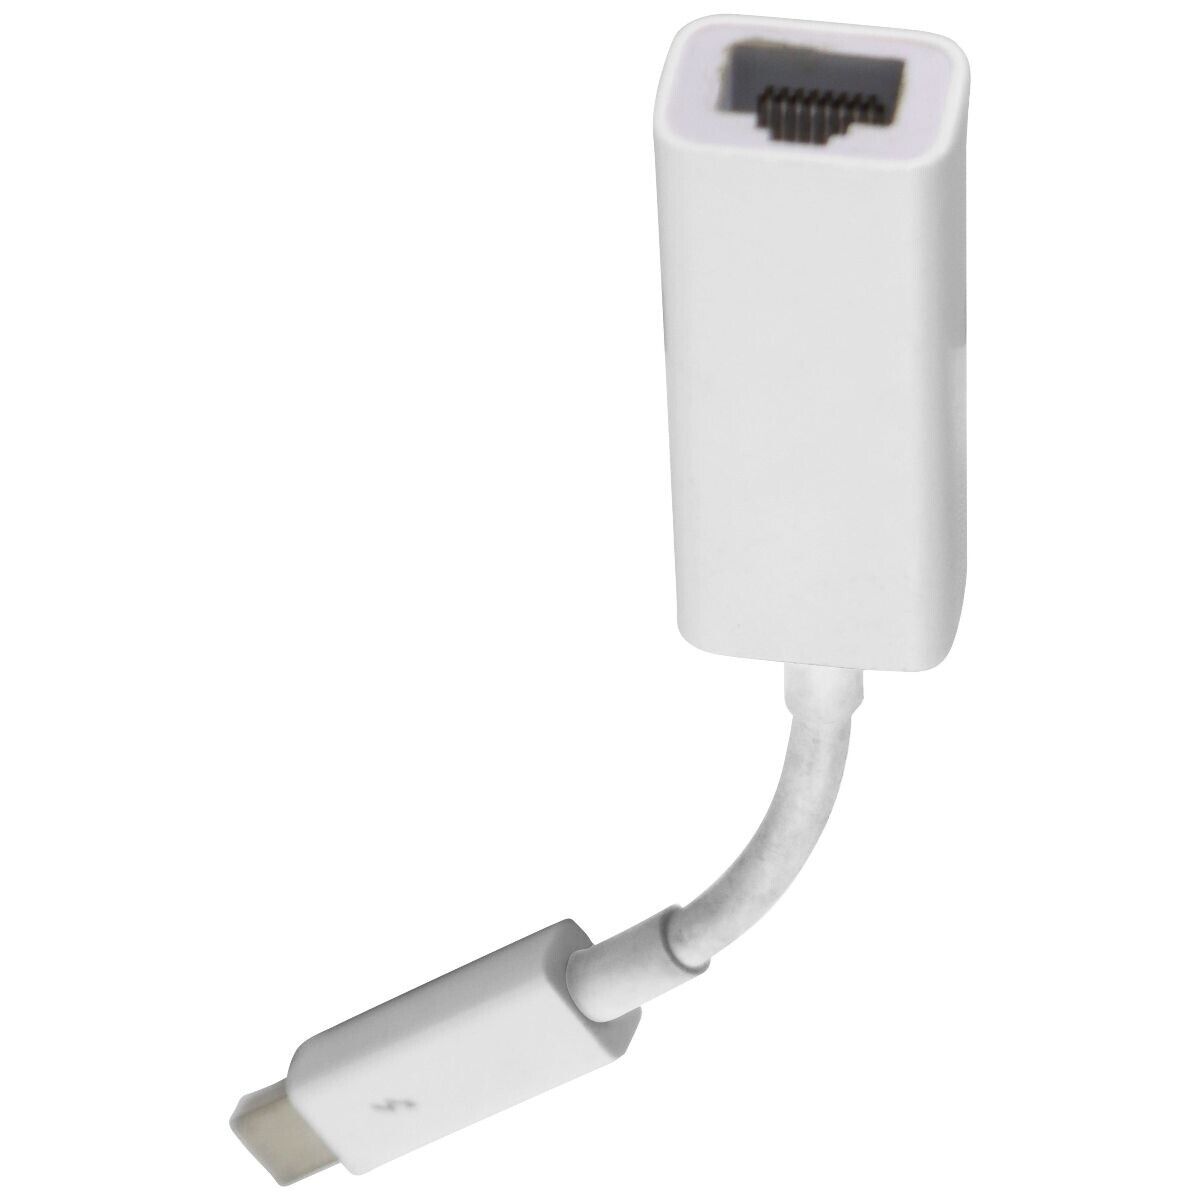 FAIR Apple Thunderbolt to Gigabit Ethernet Adapter - White (MD463LL/A / A1433)